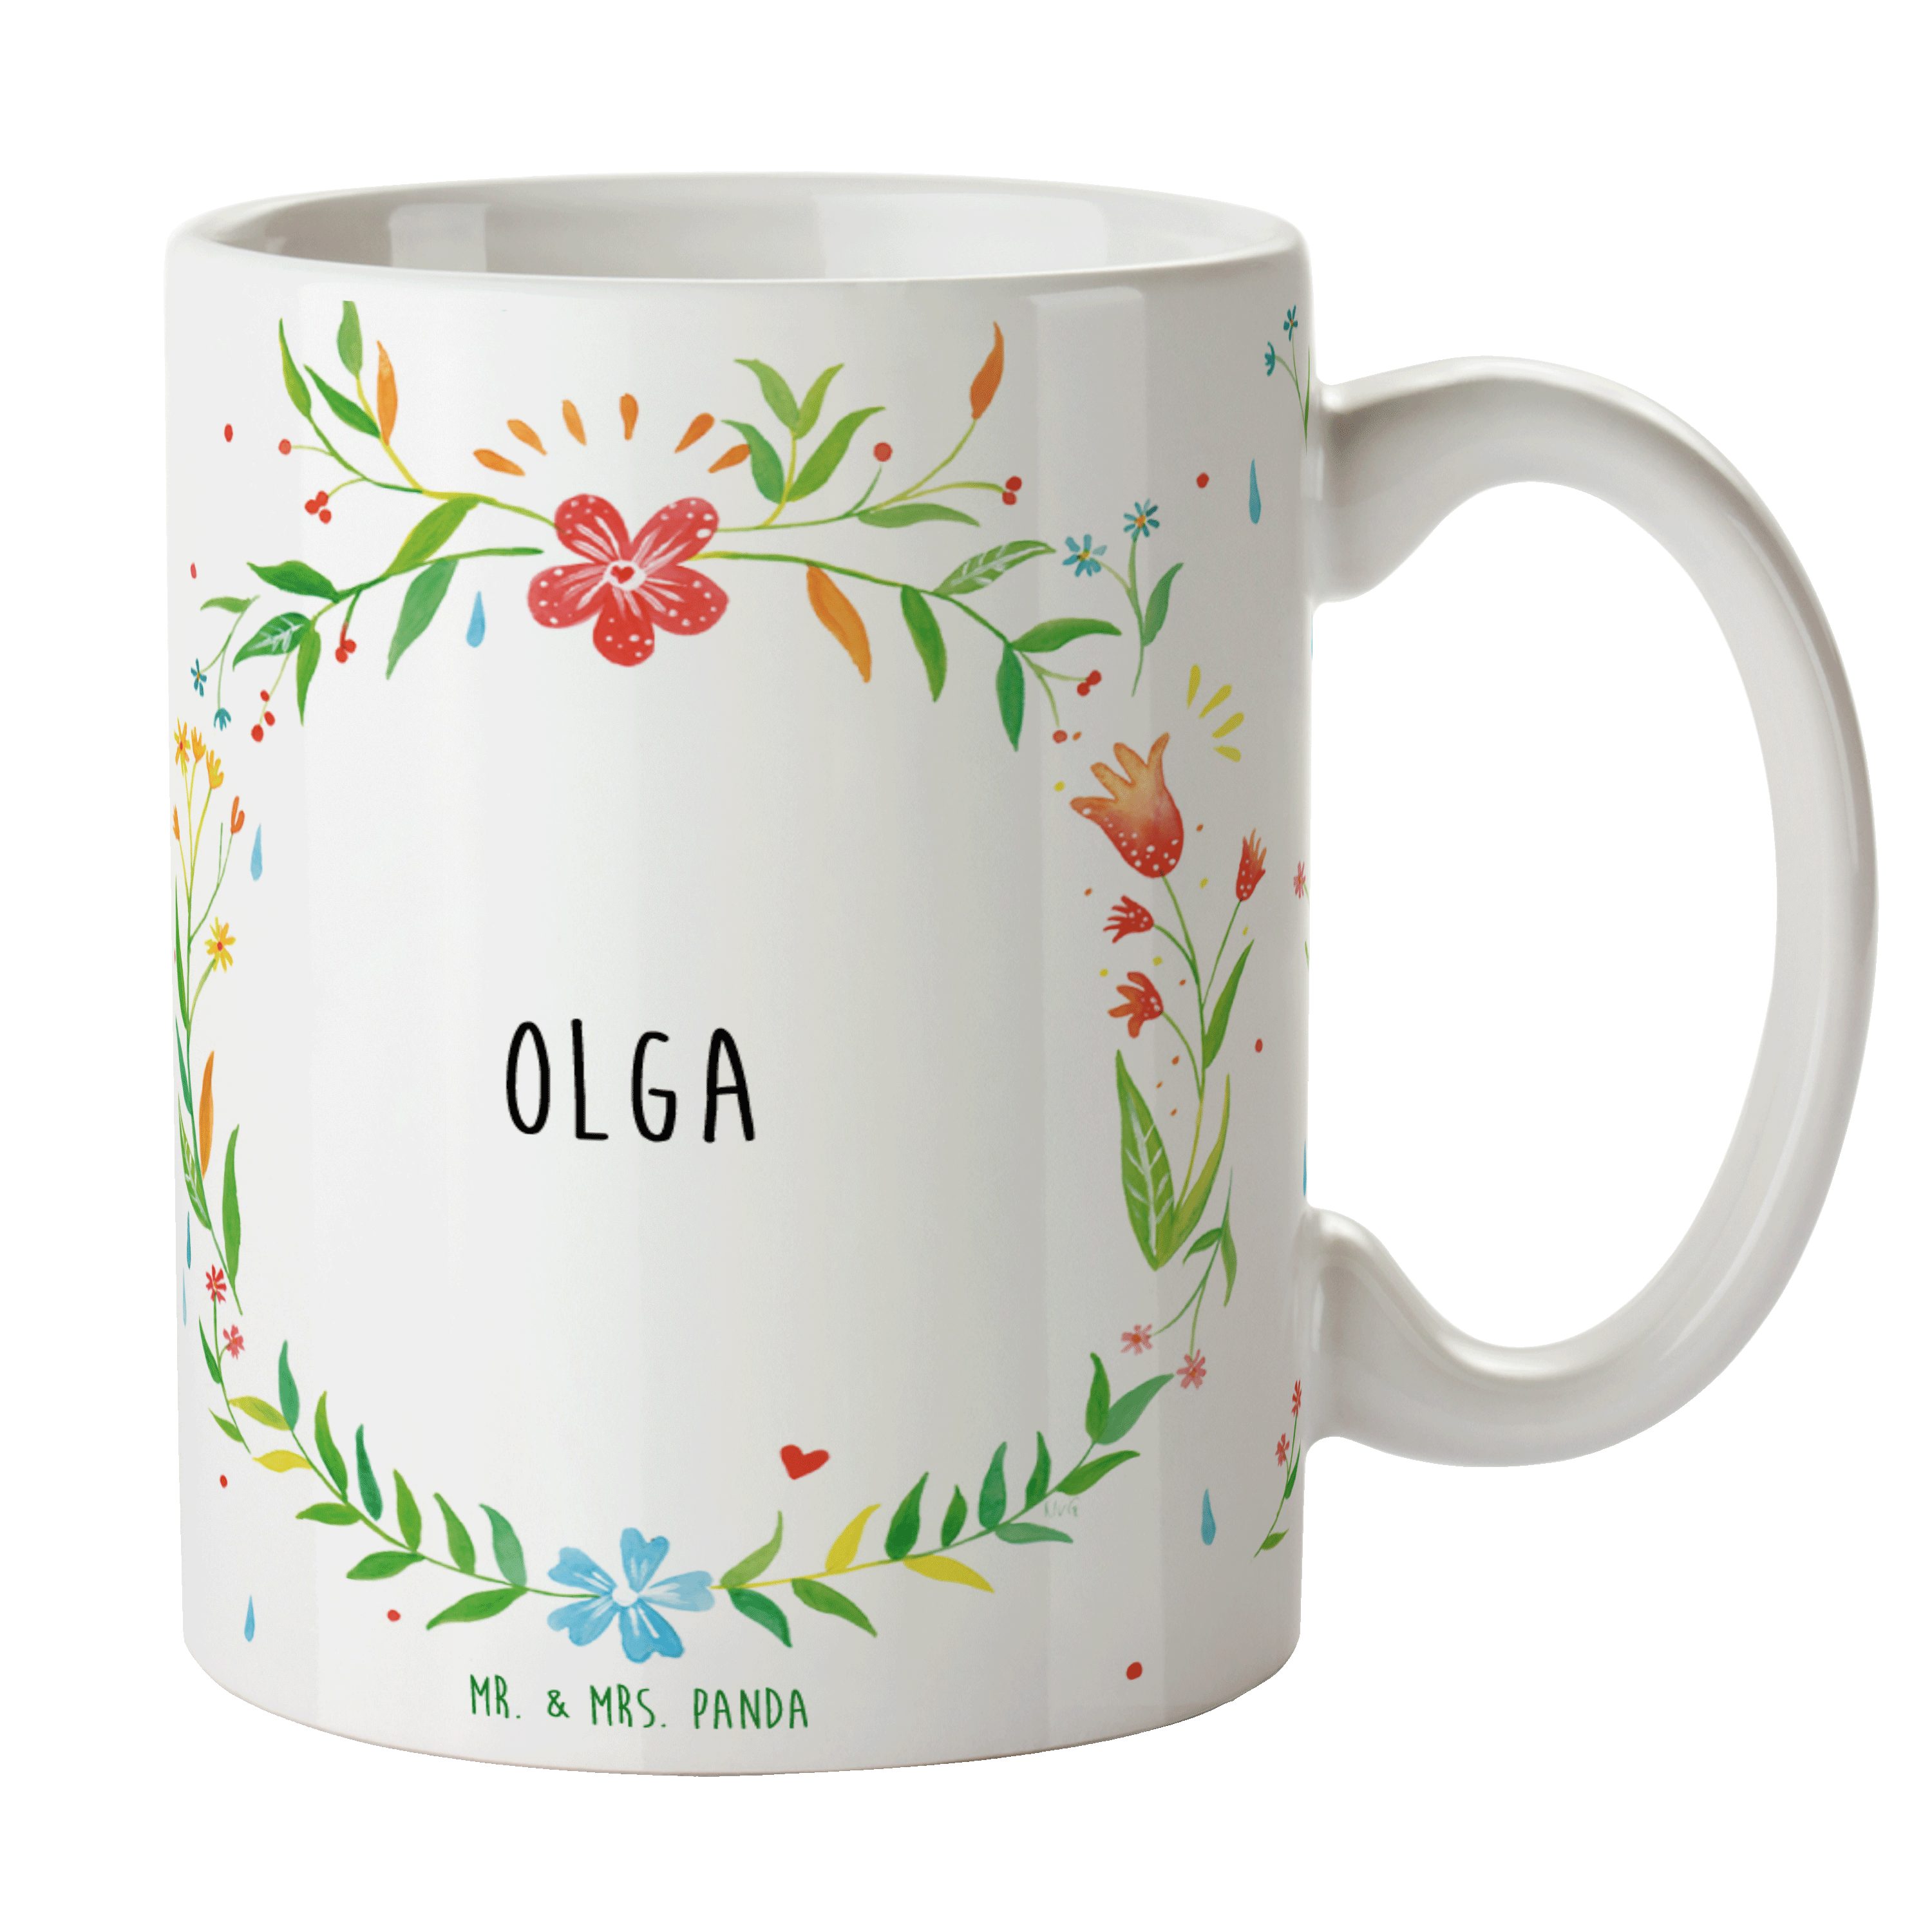 Mr. & Mrs. Panda Tasse Olga - Geschenk, Tasse Sprüche, Kaffeetasse, Tasse Motive, Teebecher, Keramik